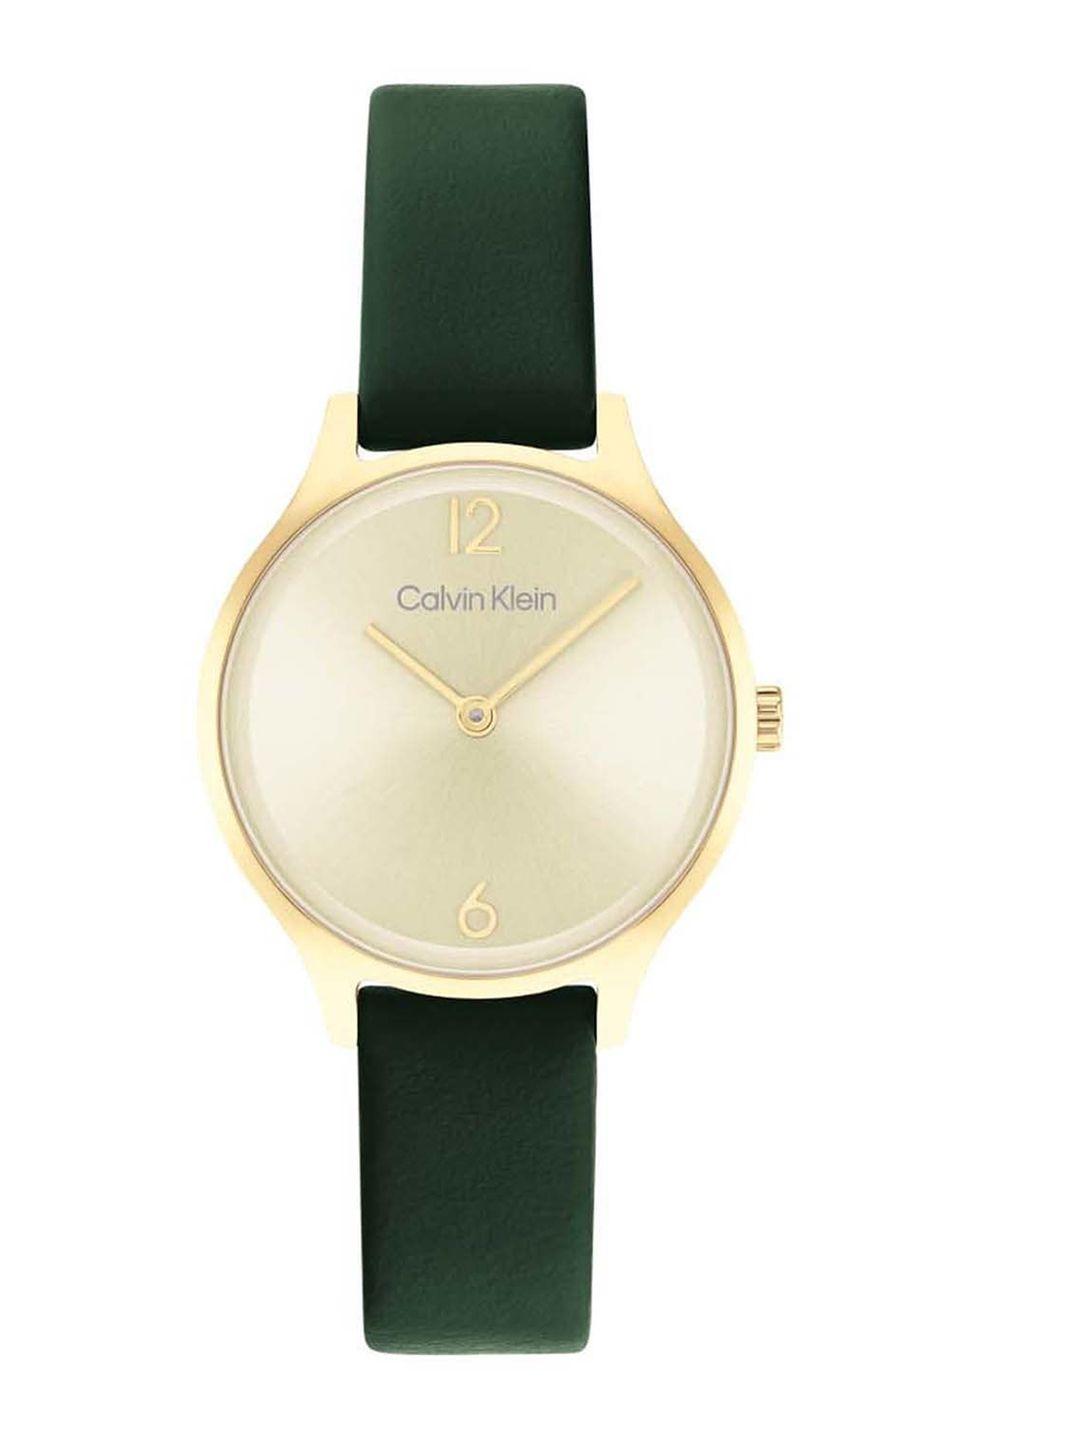 calvin klein women dial & green leather straps analogue watch 25200147